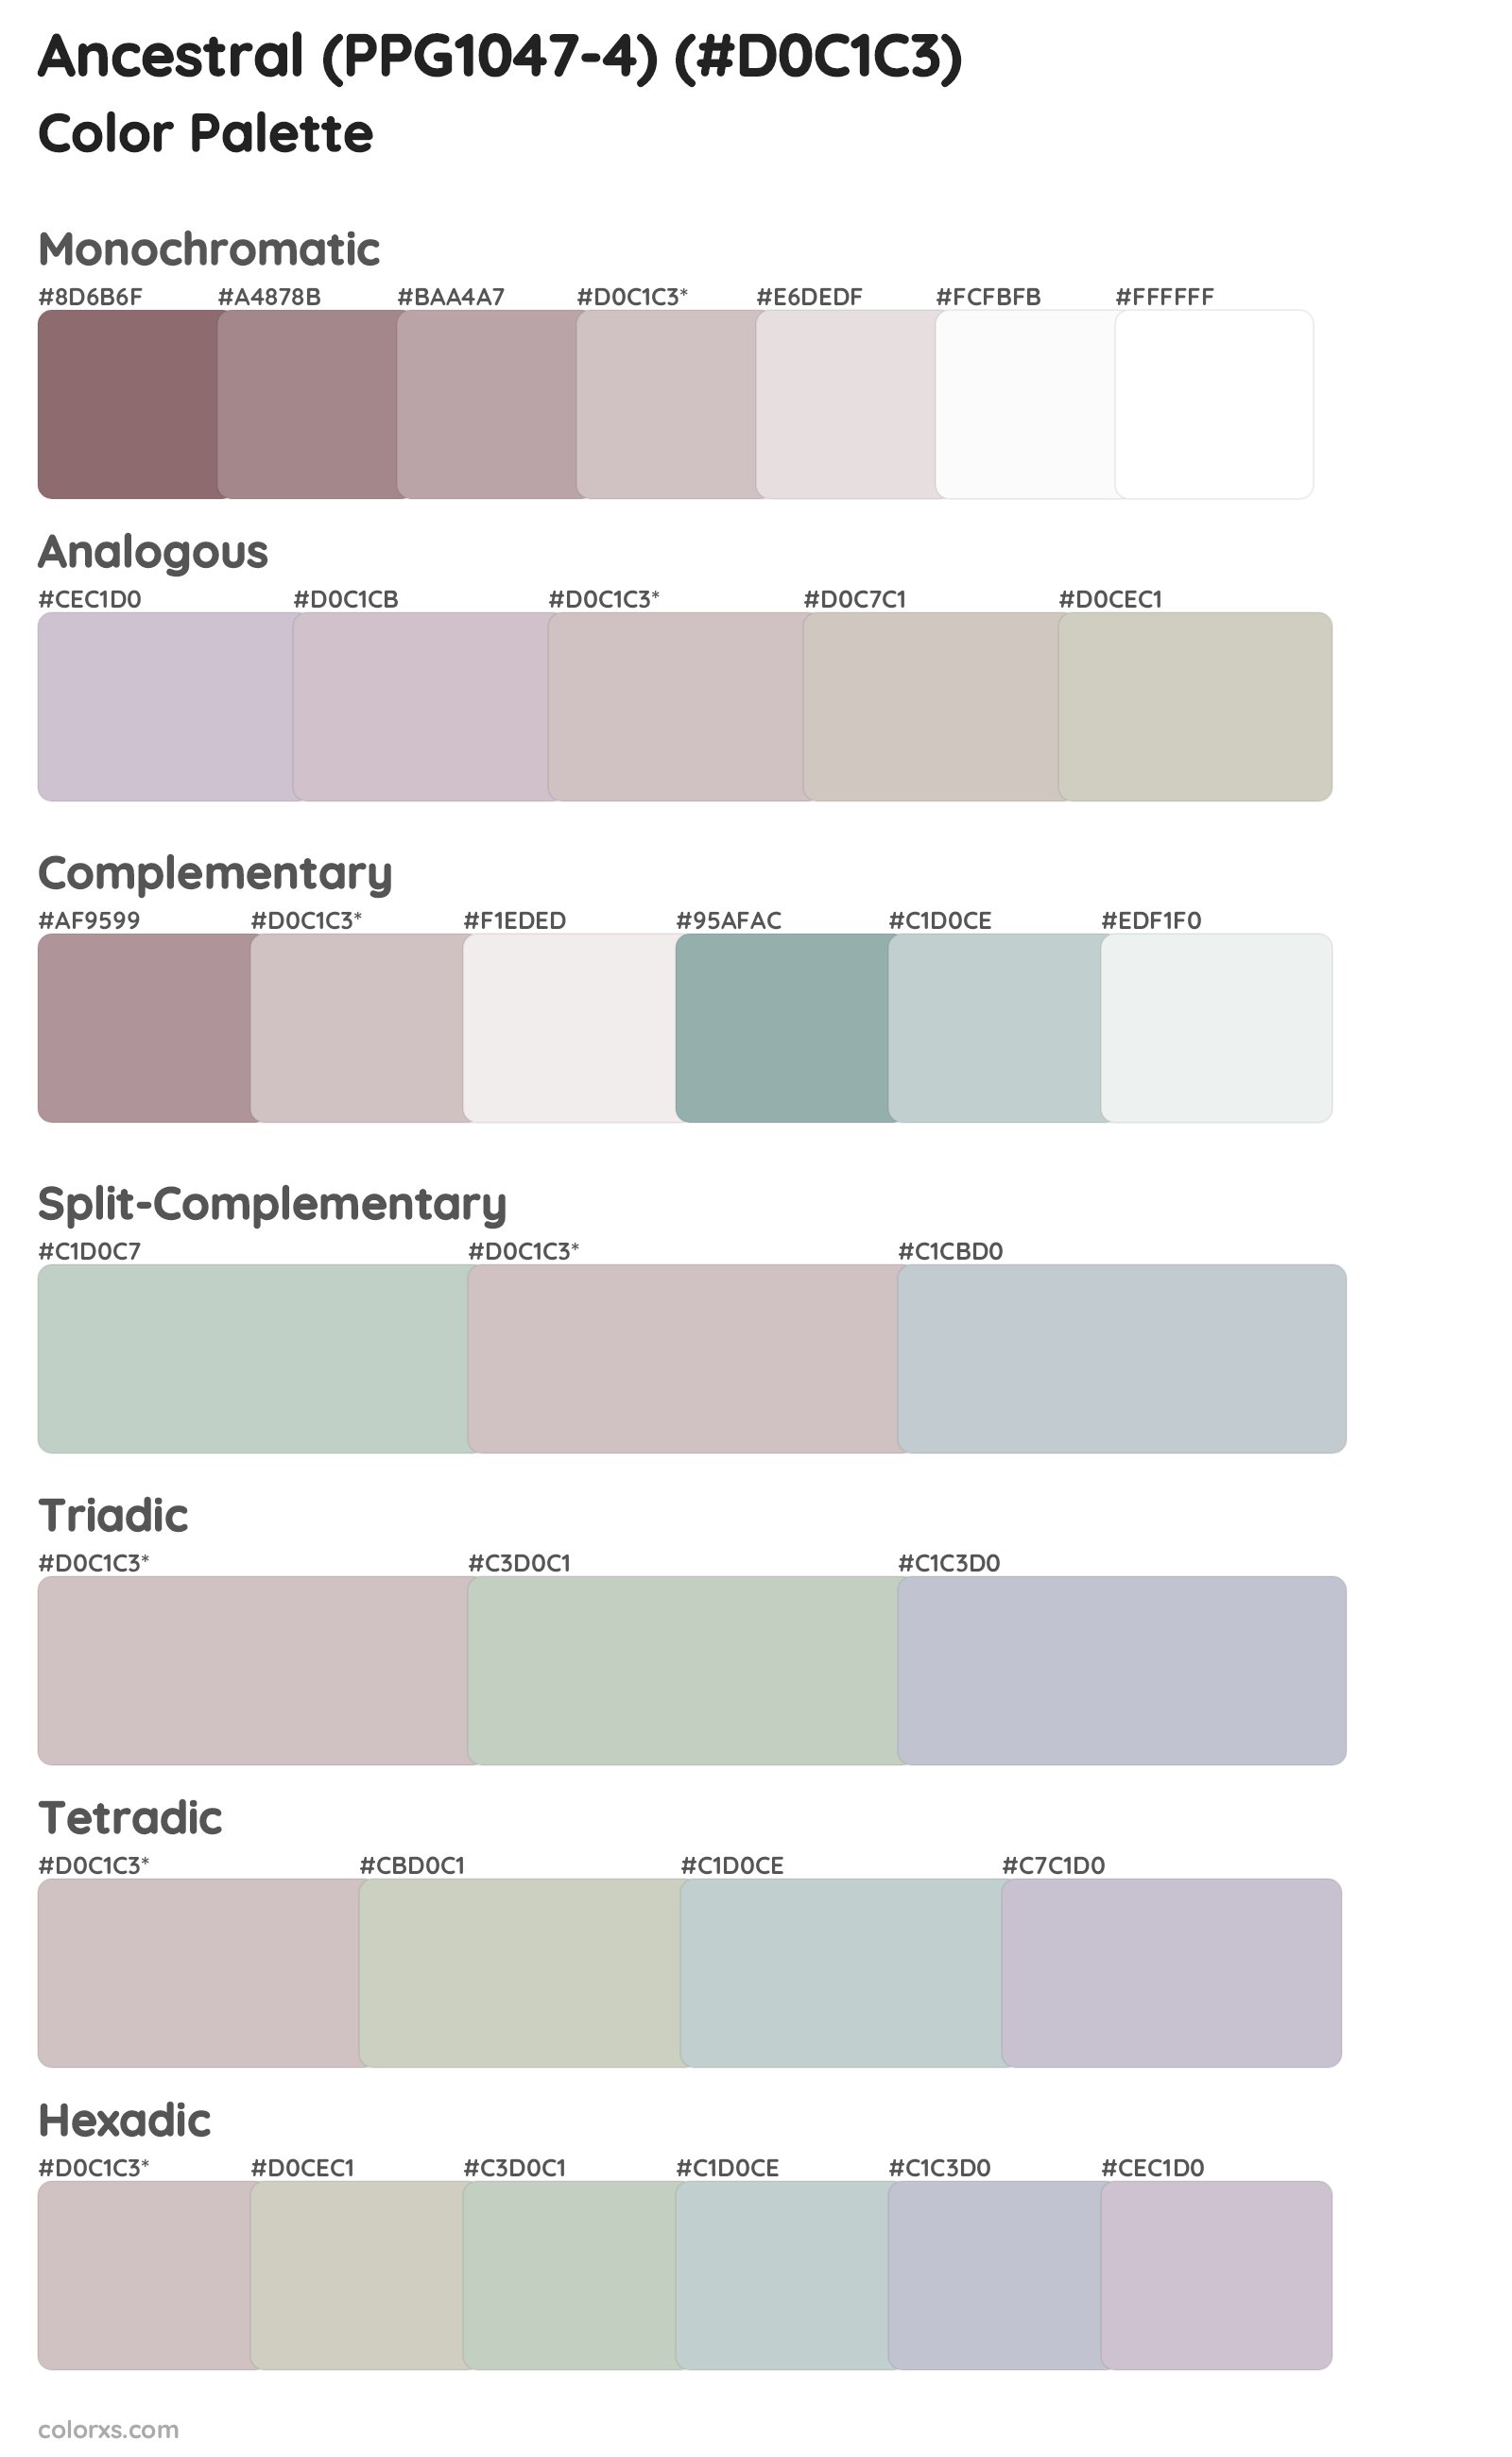 Ancestral (PPG1047-4) Color Scheme Palettes